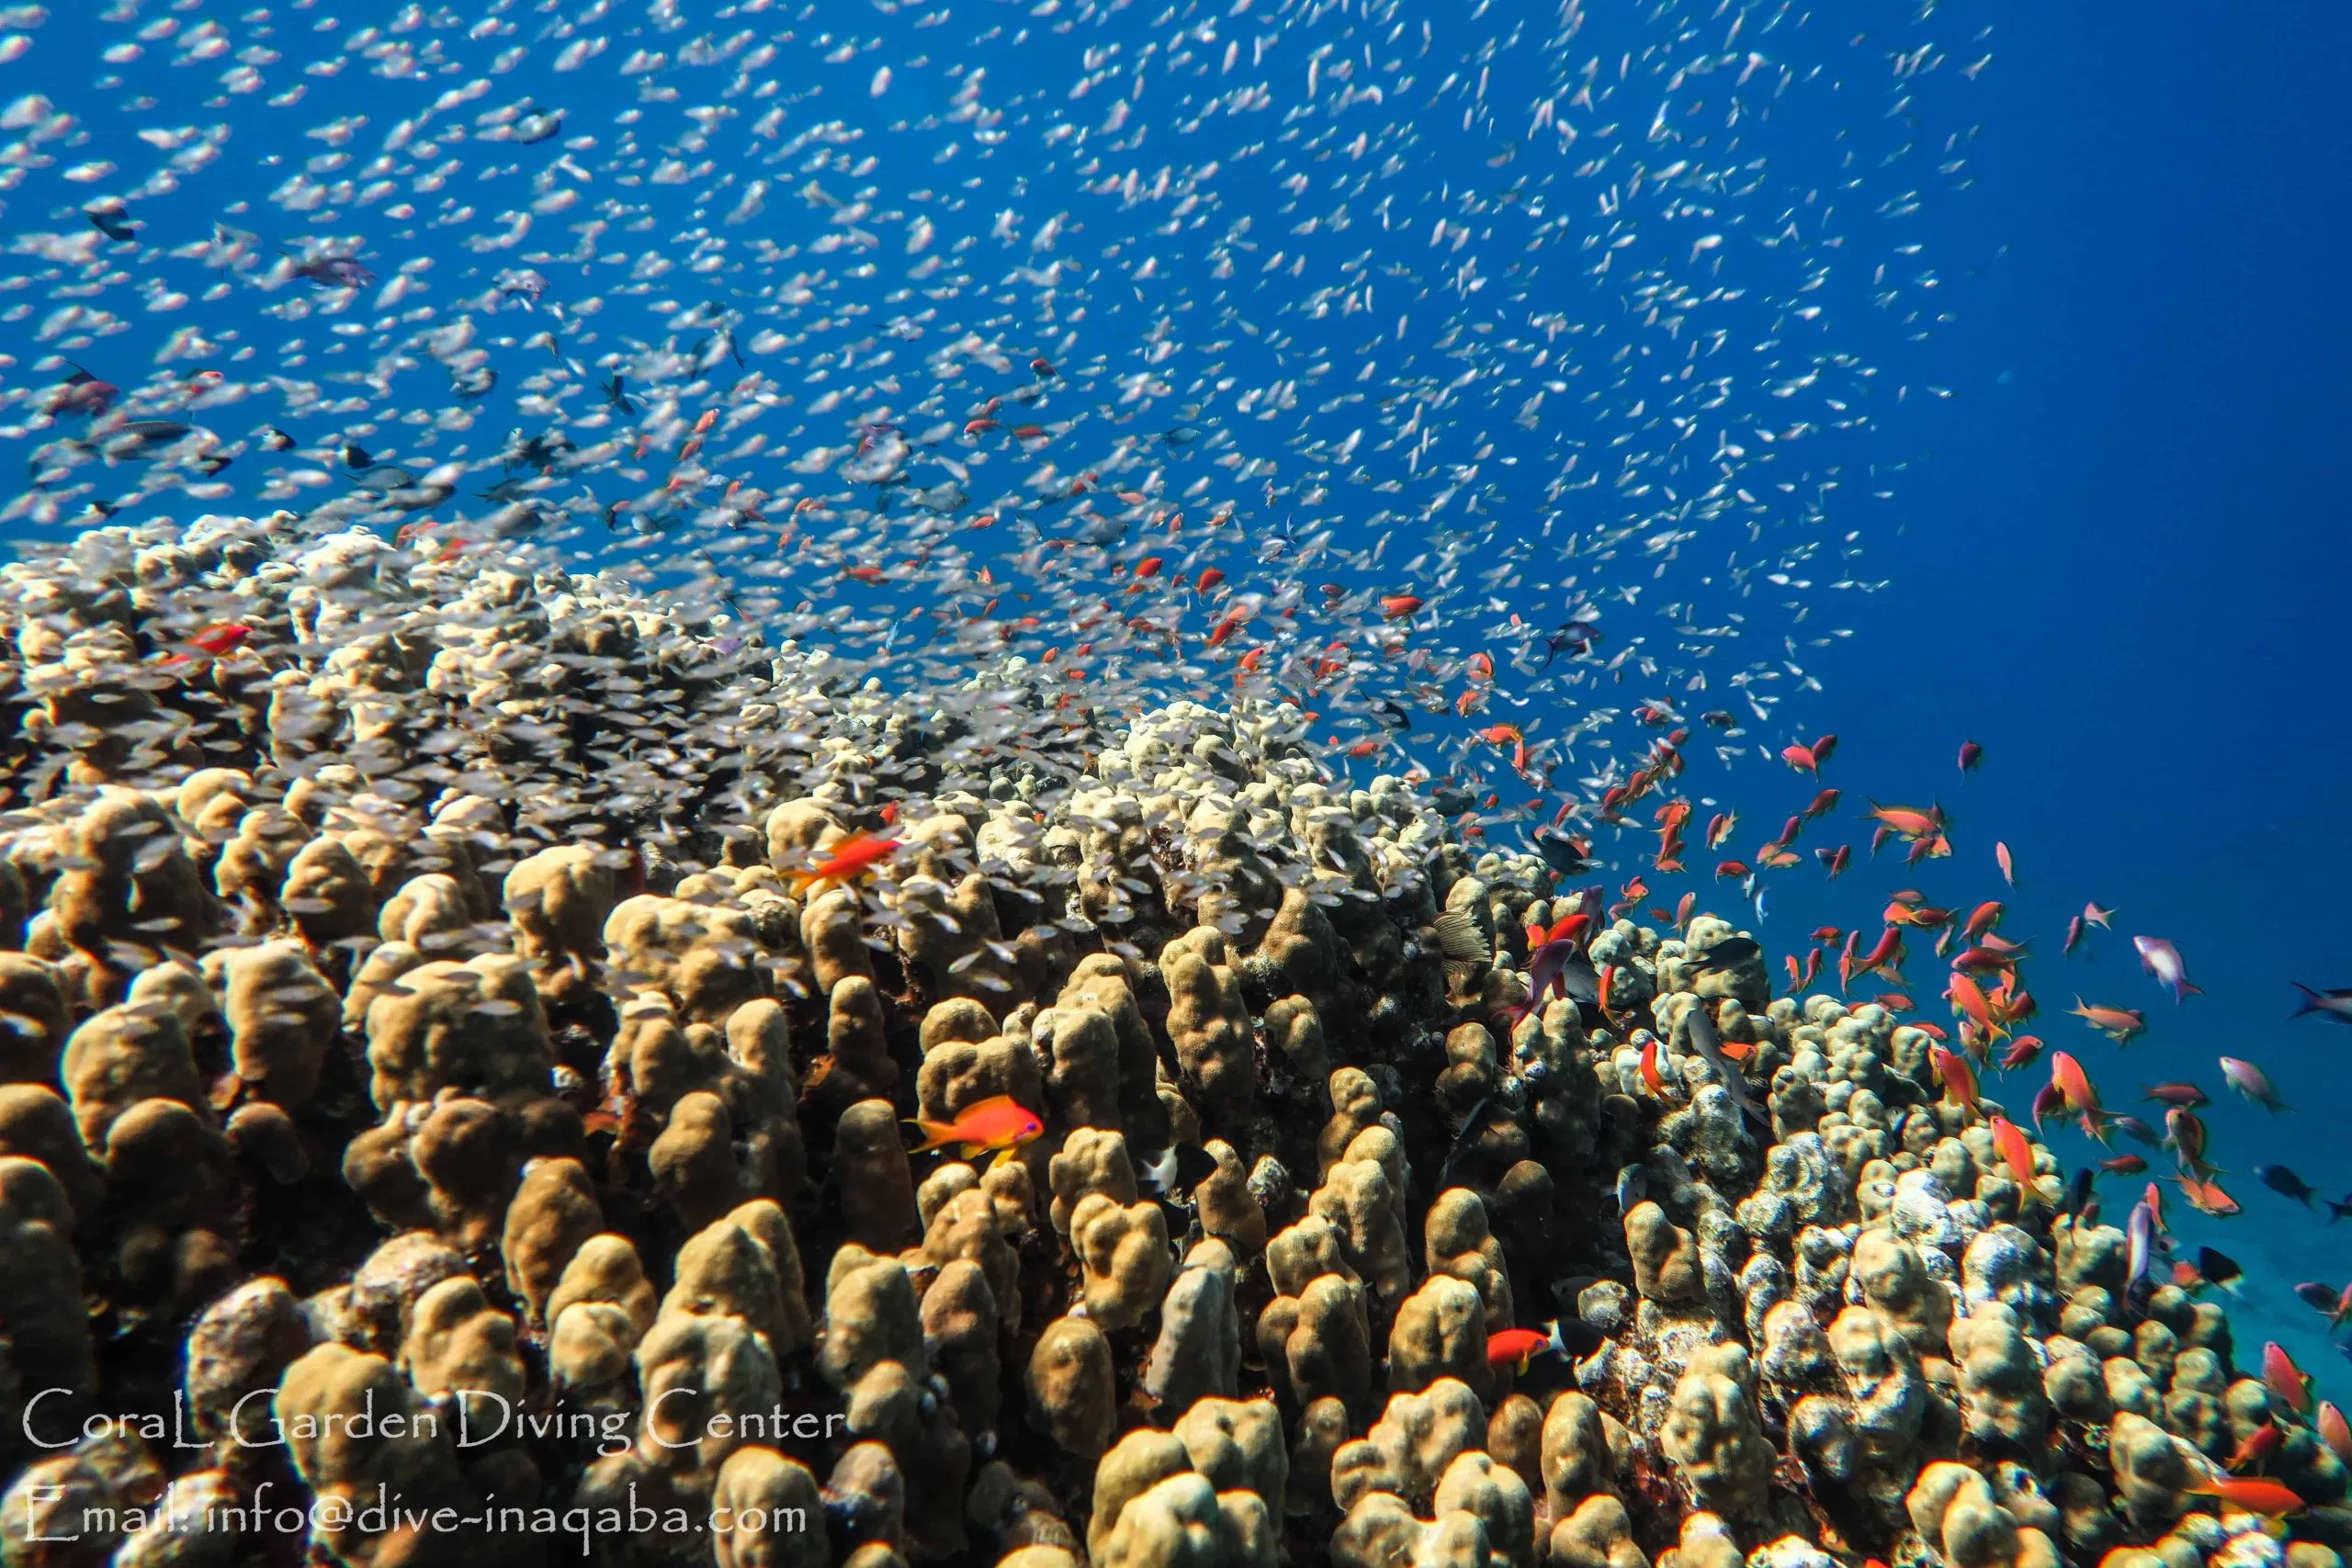 Corals and Marine life sites in aqaba 